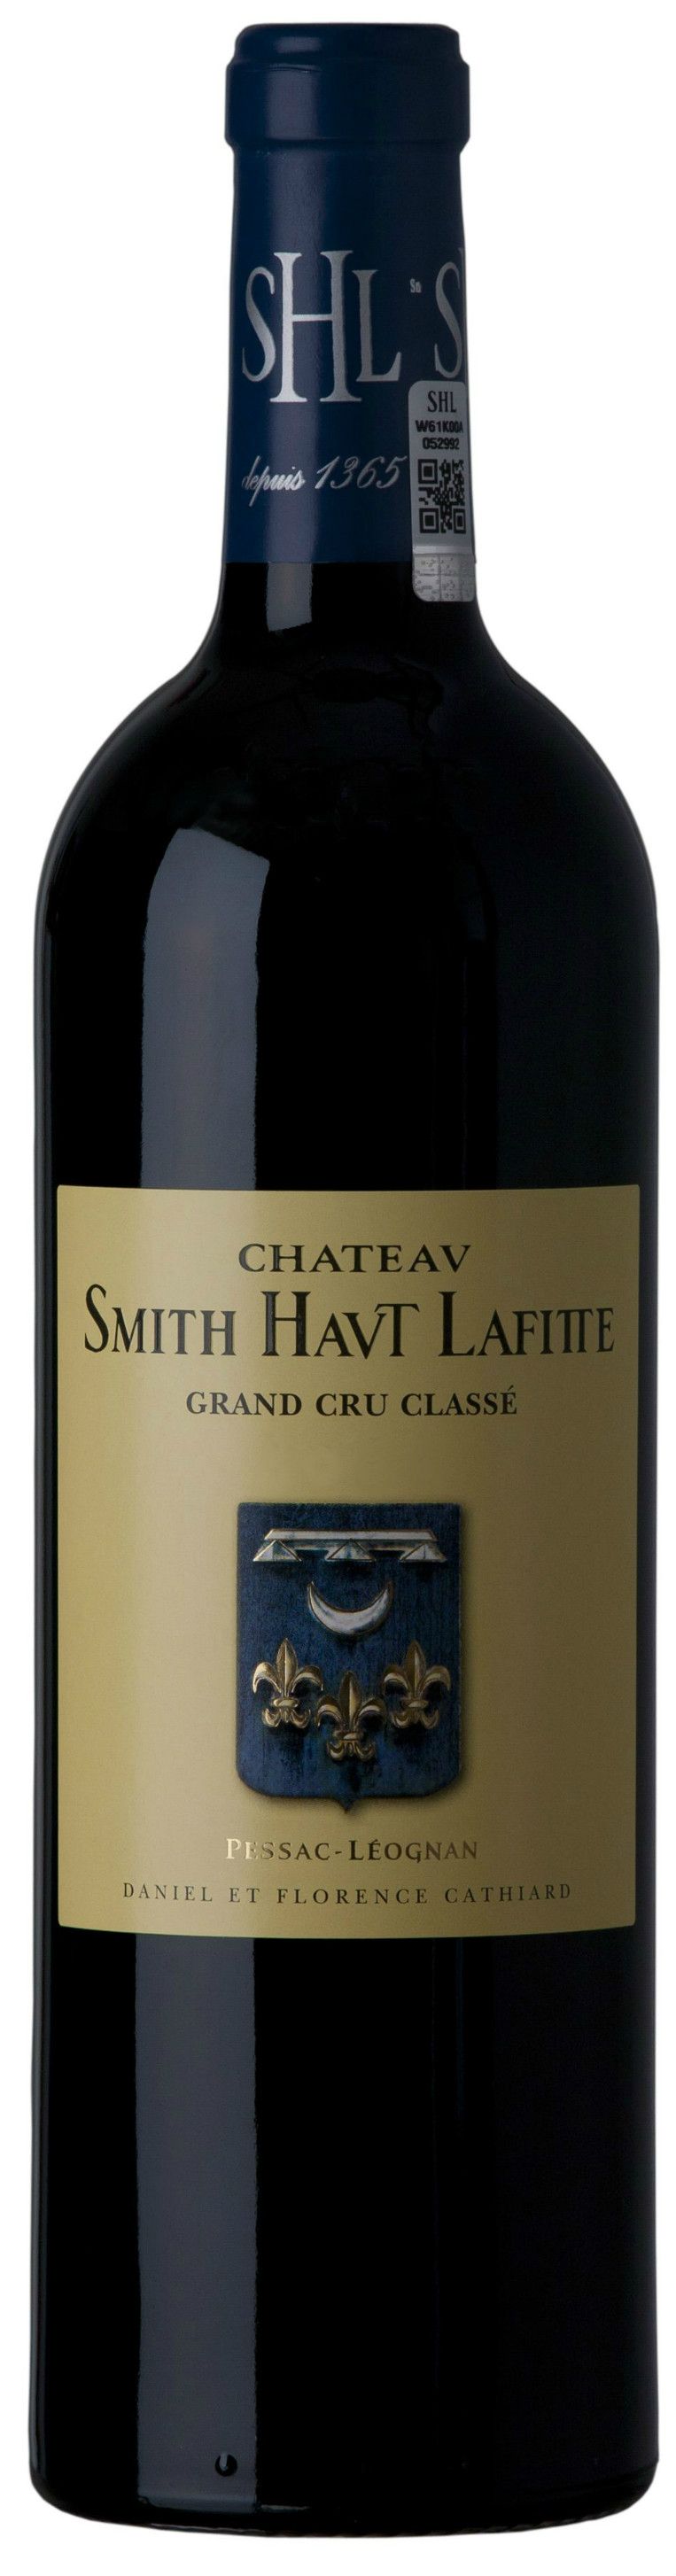 Chateau Smith Haut Lafitte, 2006